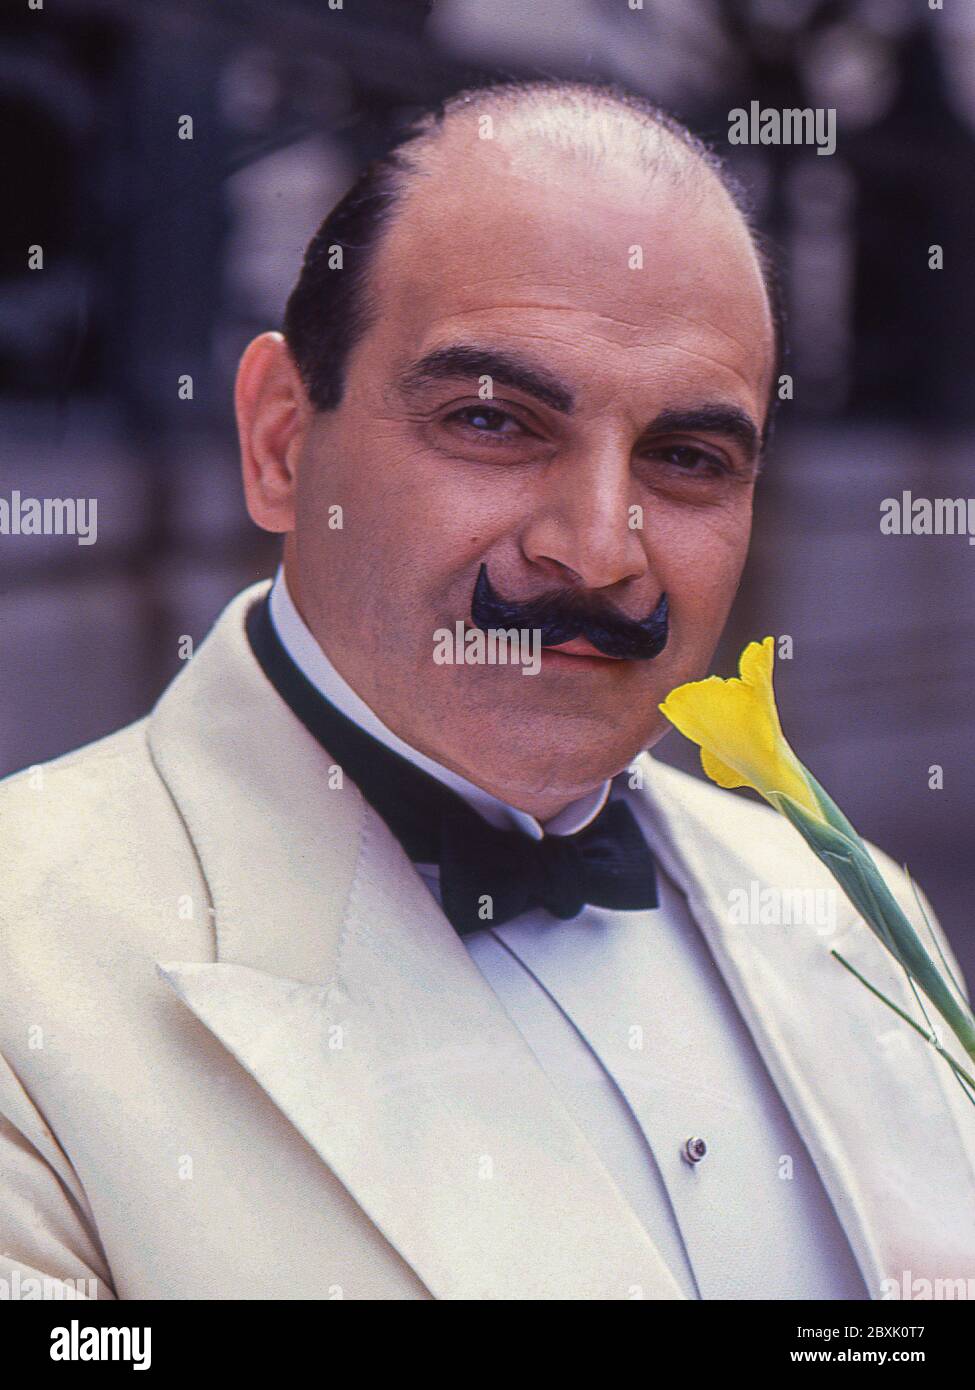 David Suchet as Hercule Poirot Stock Photo